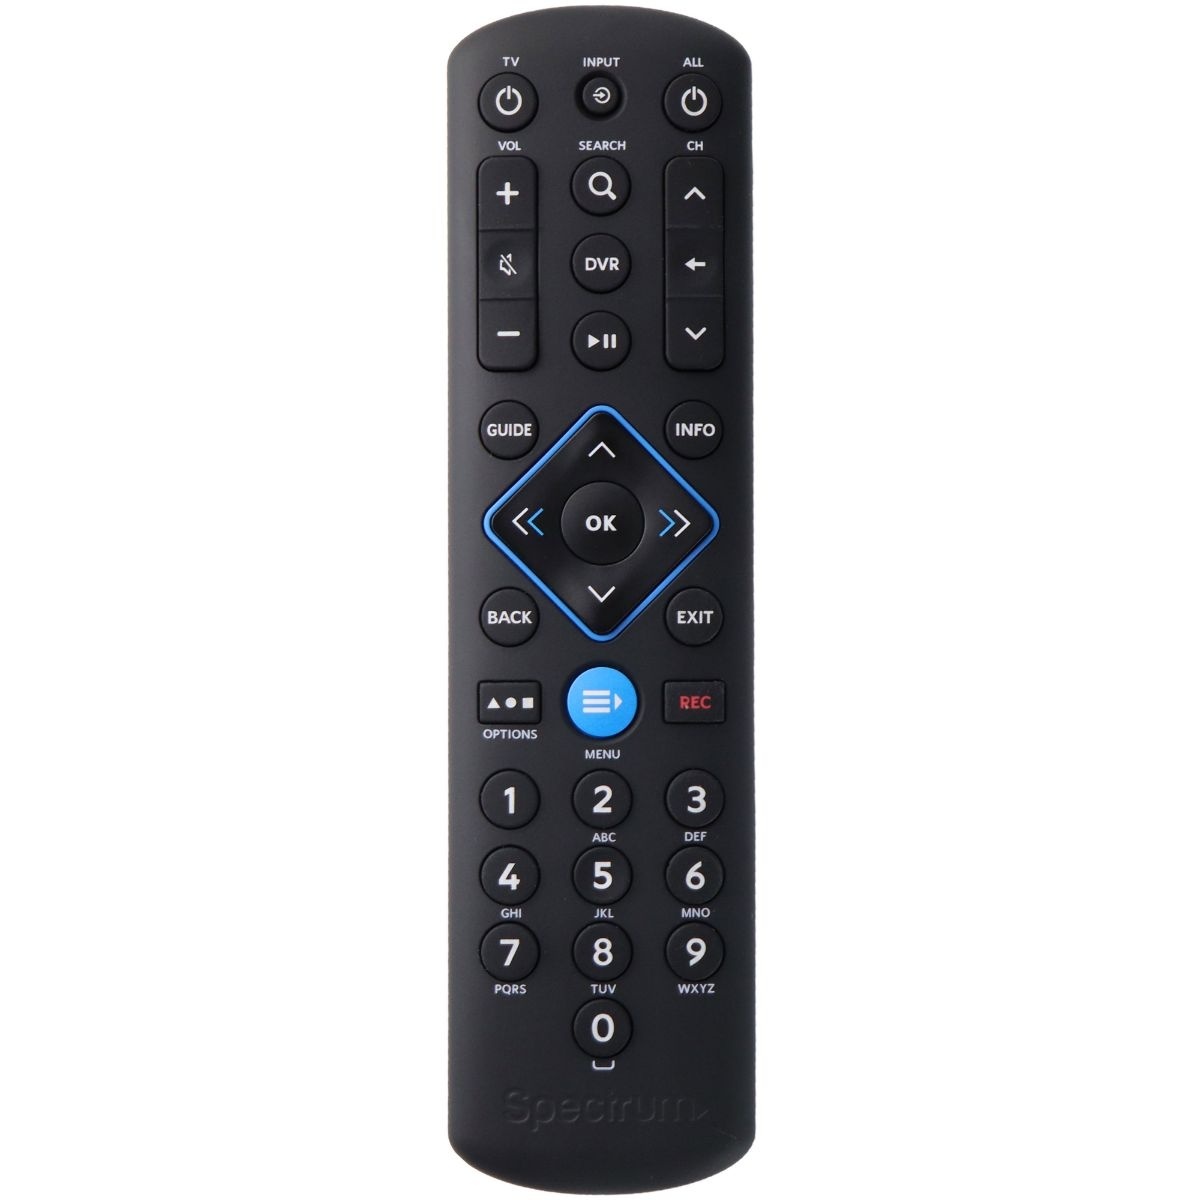 Spectrum Cable Box Remote Control - Black (URC1160) - Remote Controls